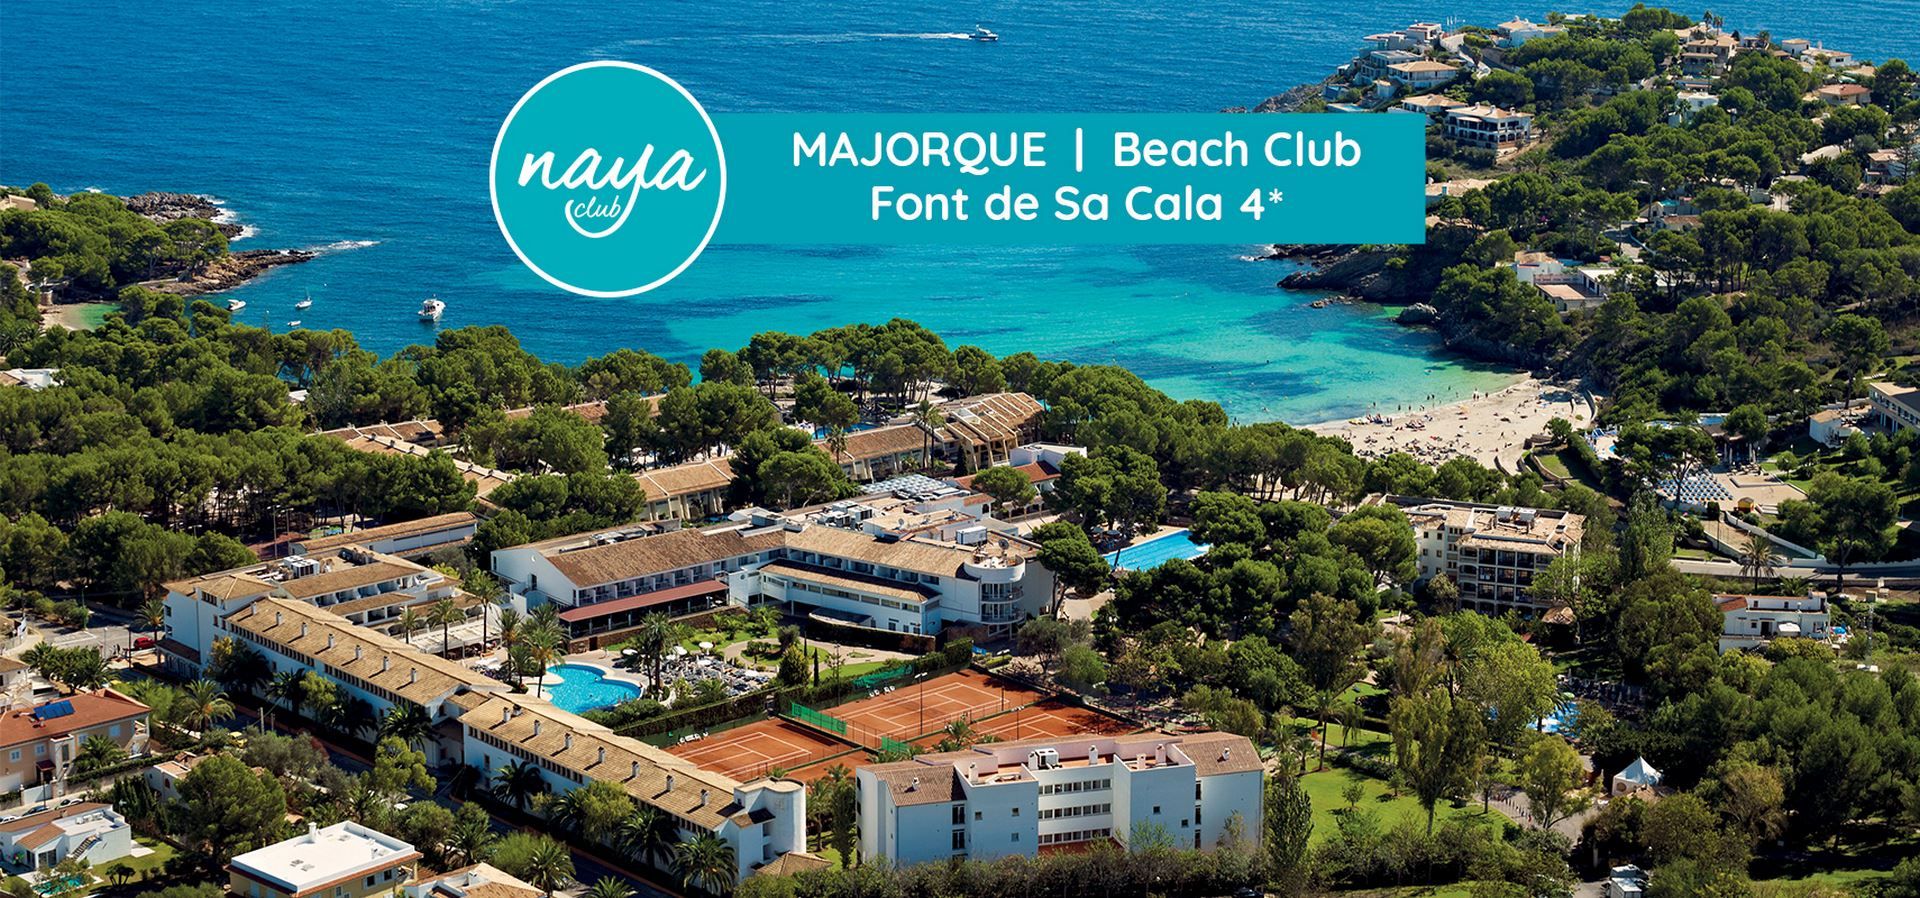 Naya Club Majorque Hôtel Beach Club Font De Sa Cala 4* pas cher photo 1